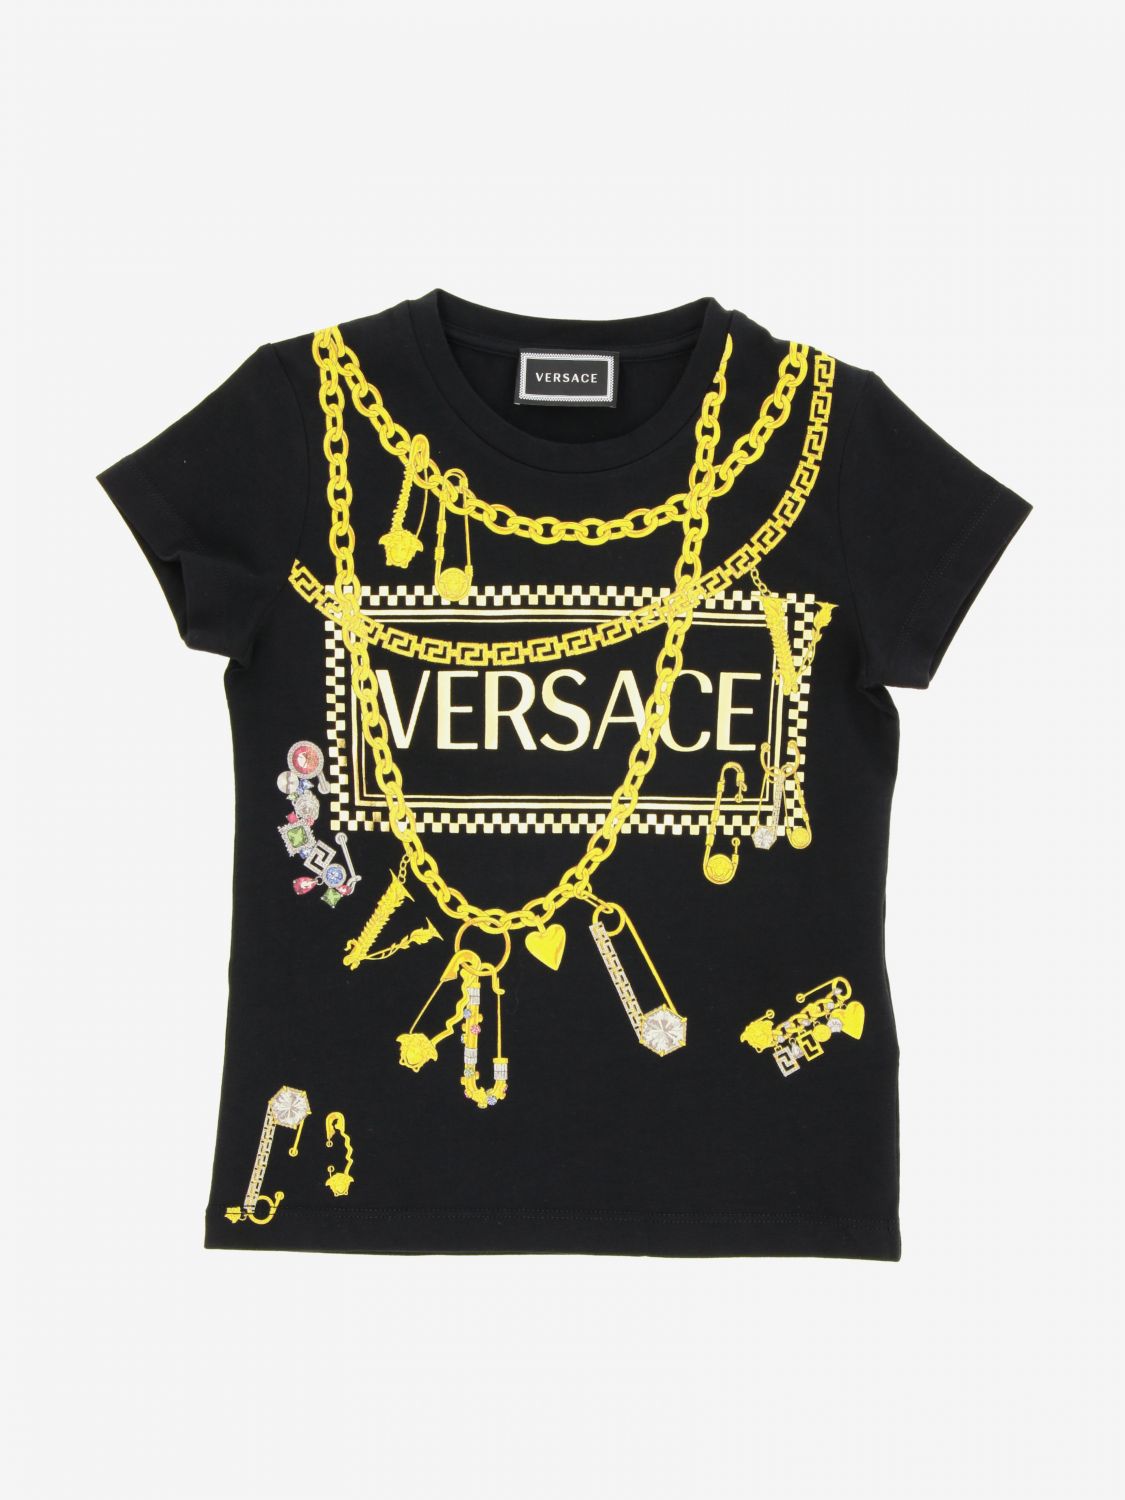 young versace t shirt